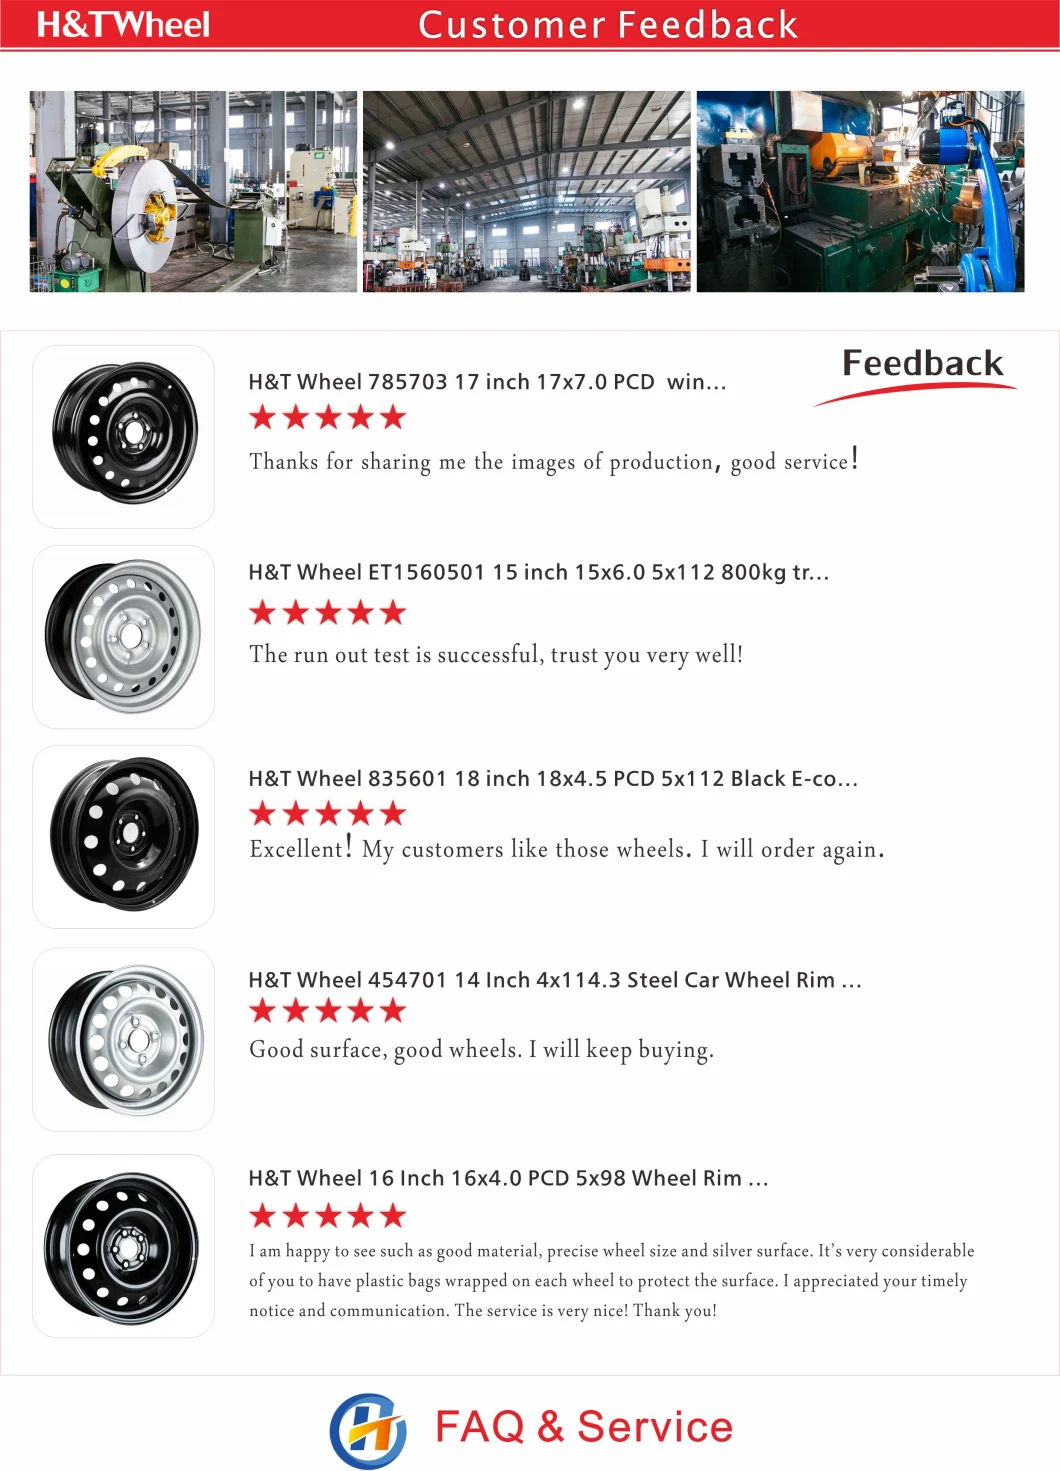 H&T Wheel 454403 14X5.5 4X108 Black E-Coating Steel Wheel Passenger Car Rims